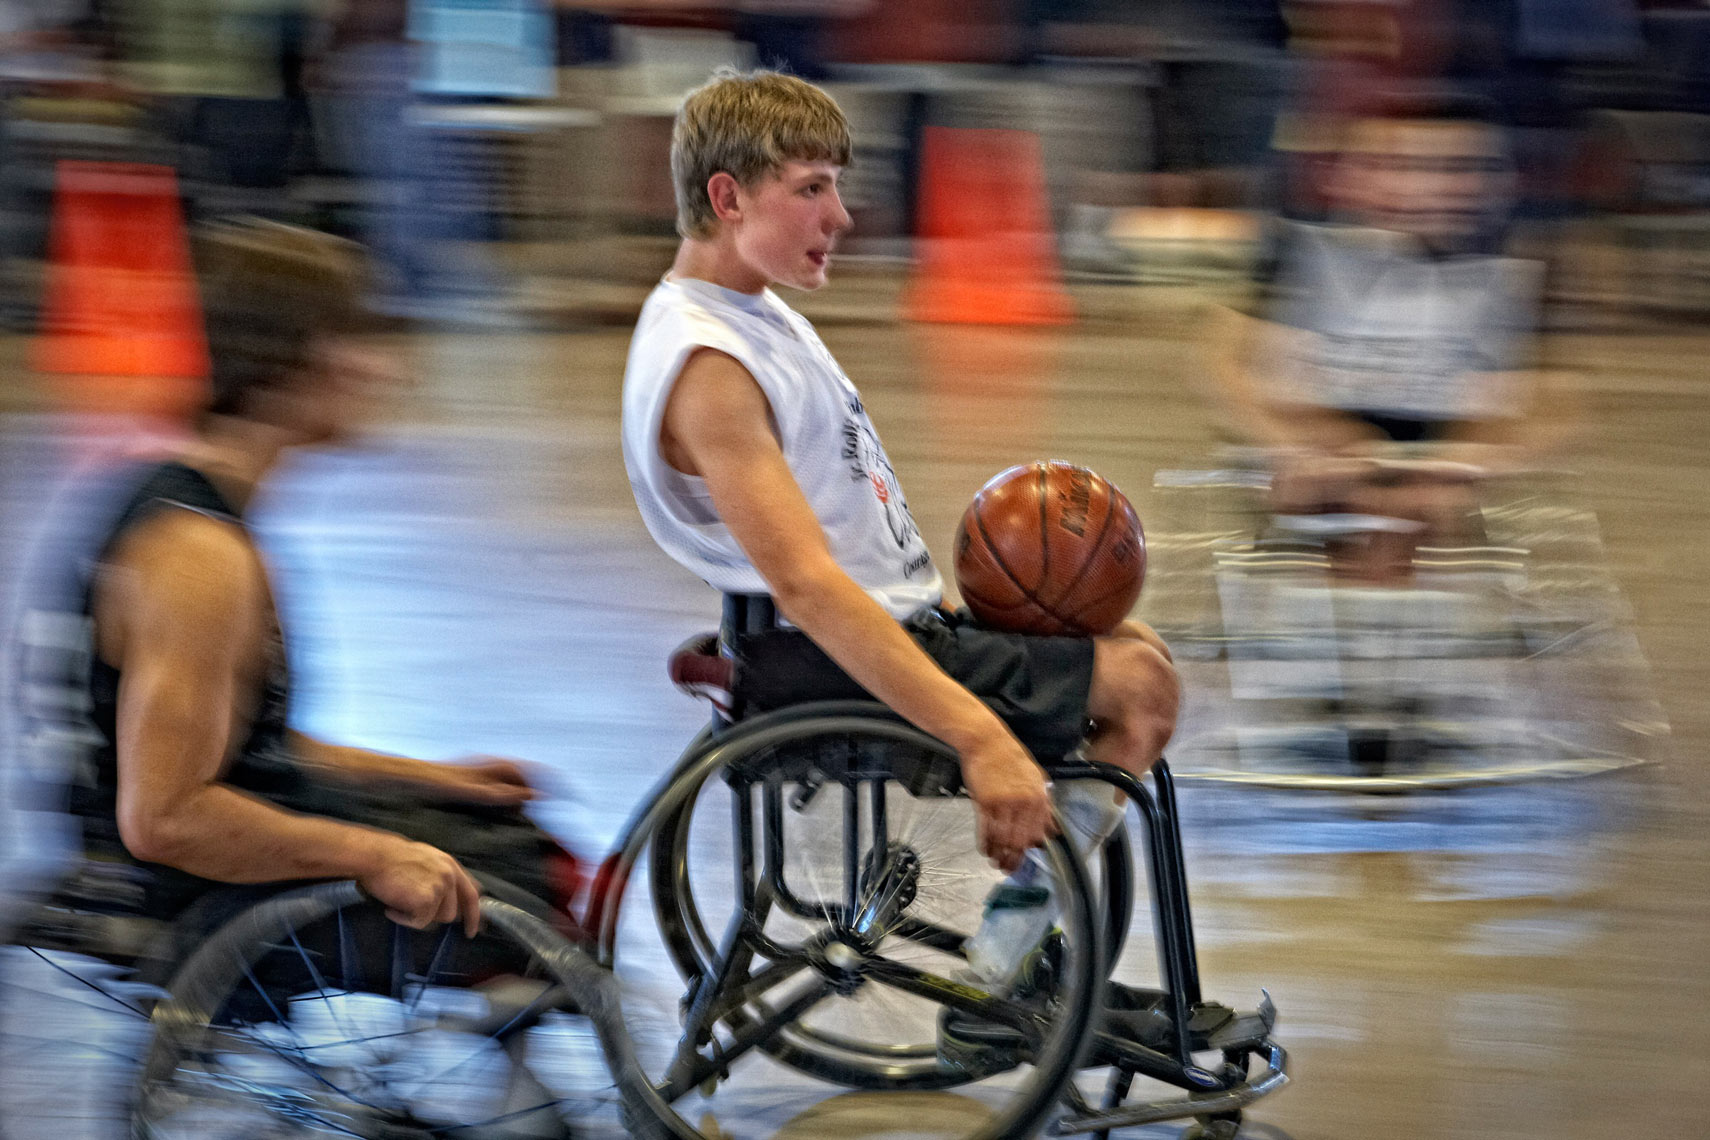 Basketball/Otto Bock/posthetic leg/lifestyle photo